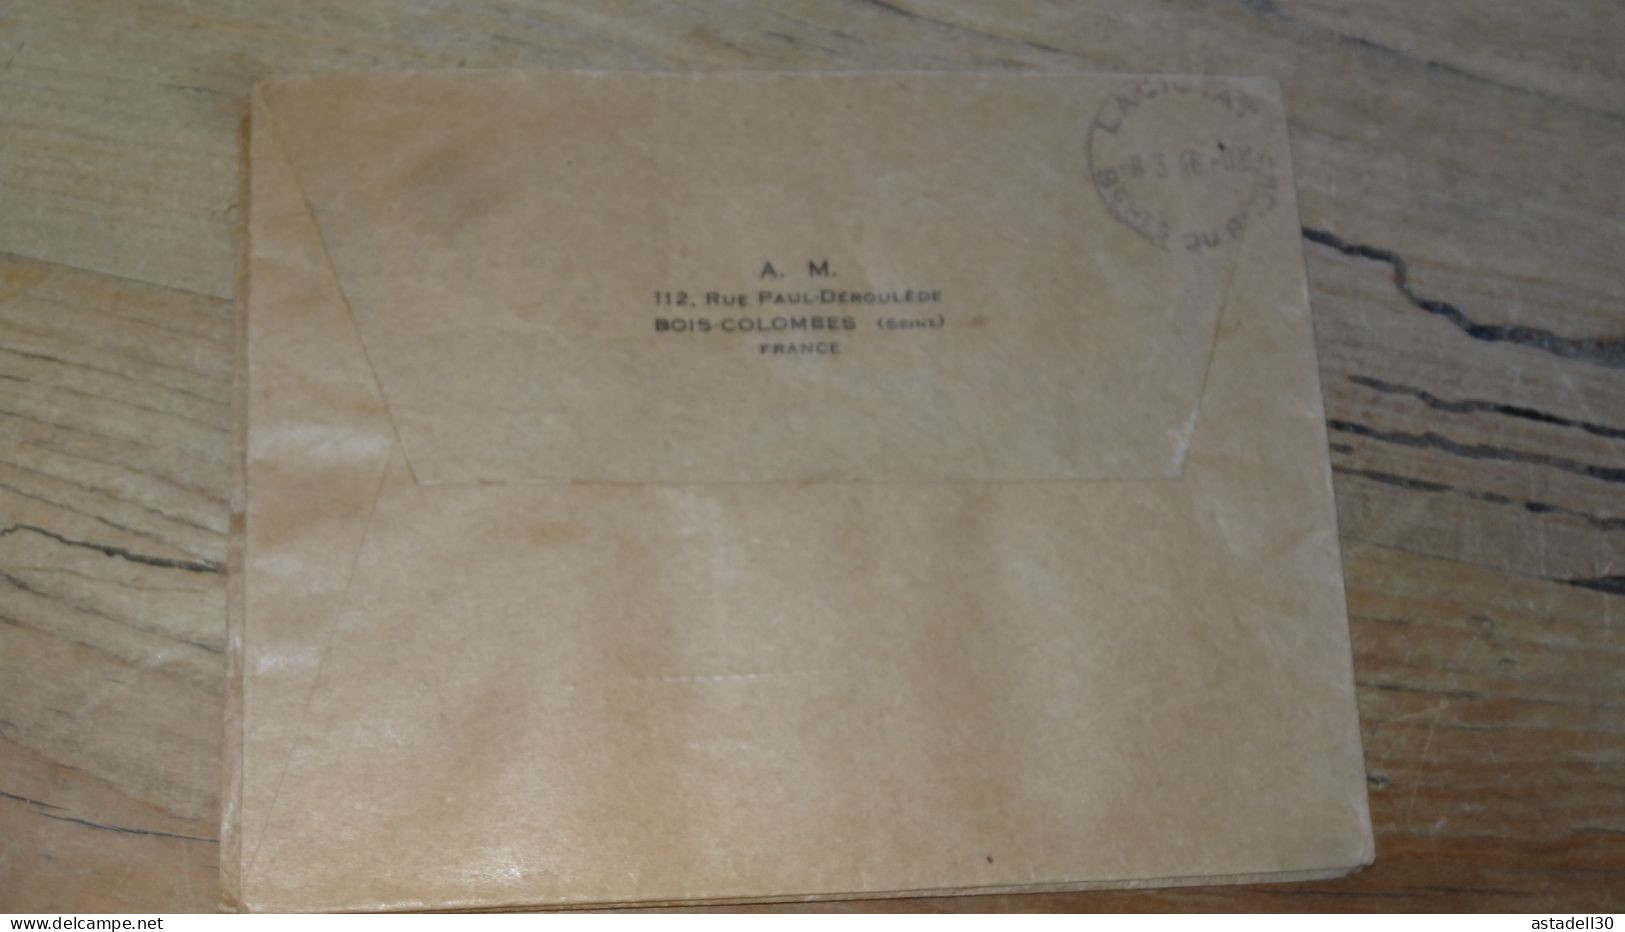 Enveloppe Recommandée PARIS Pour LA CIOTAT - 1949  ............BOITE1.......... 474 - 1921-1960: Periodo Moderno